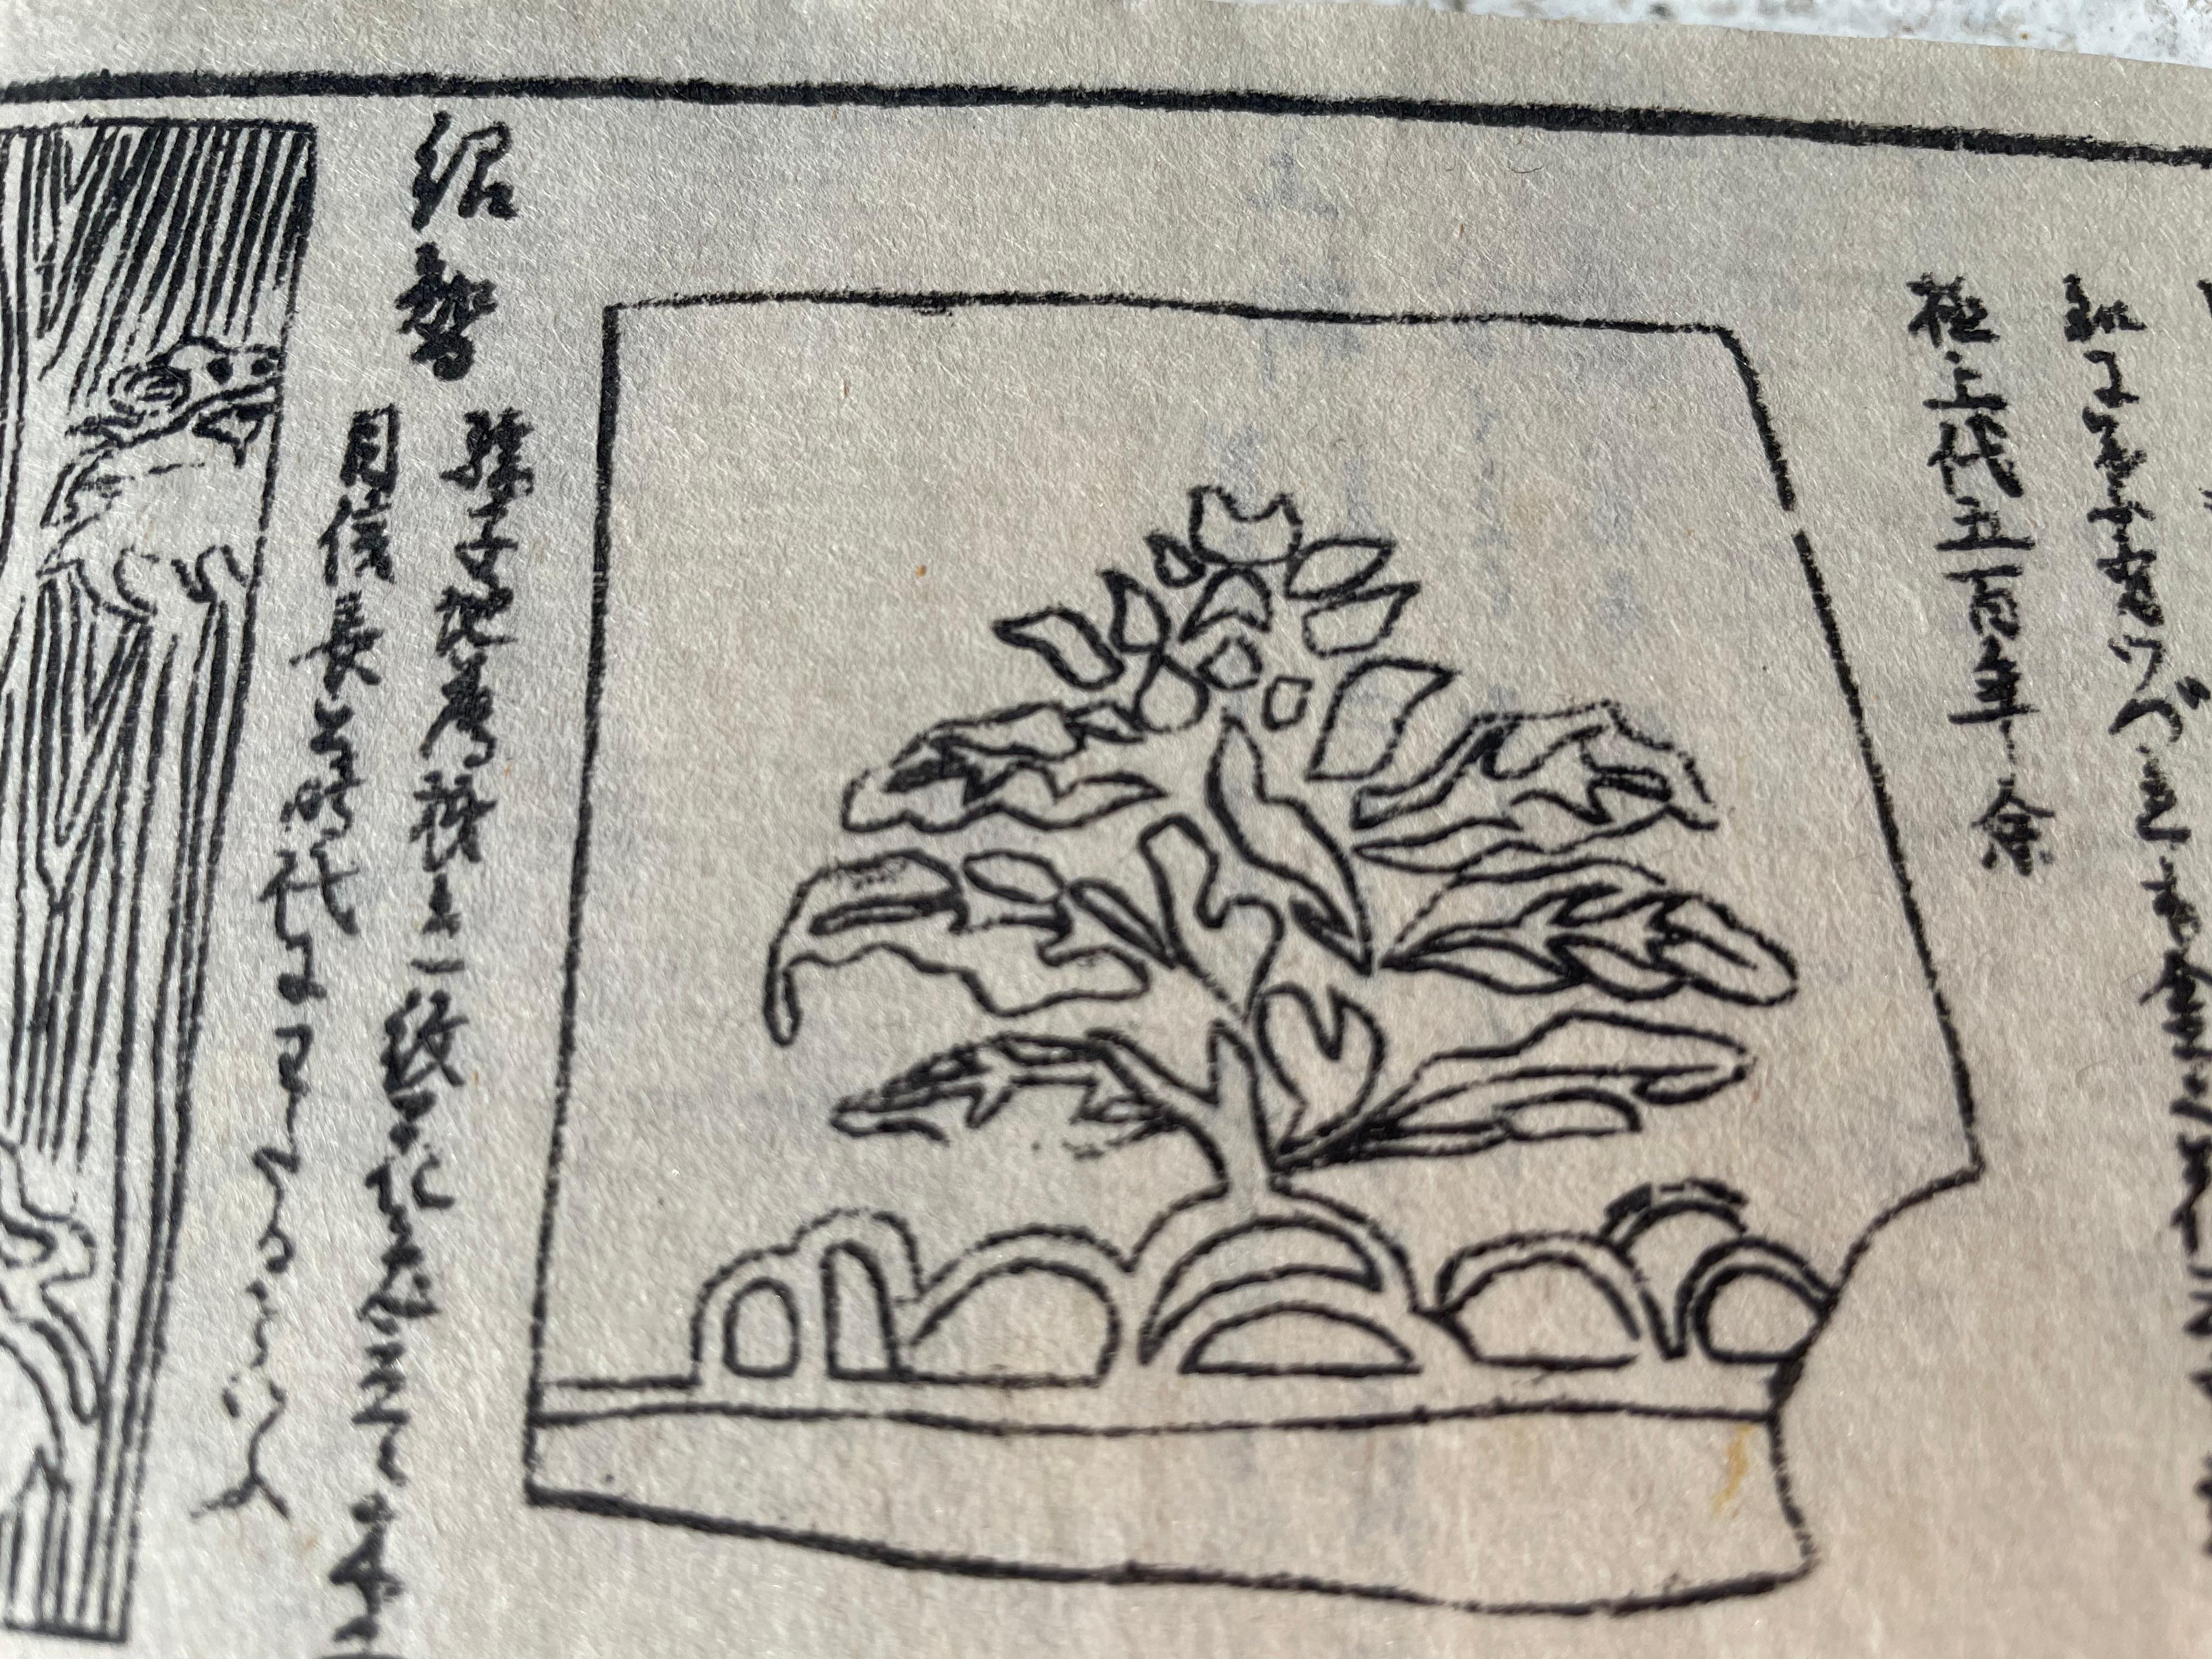 Japan Antique Tea Guide Chado Ceremony Woodblock Prints Book 1850 3